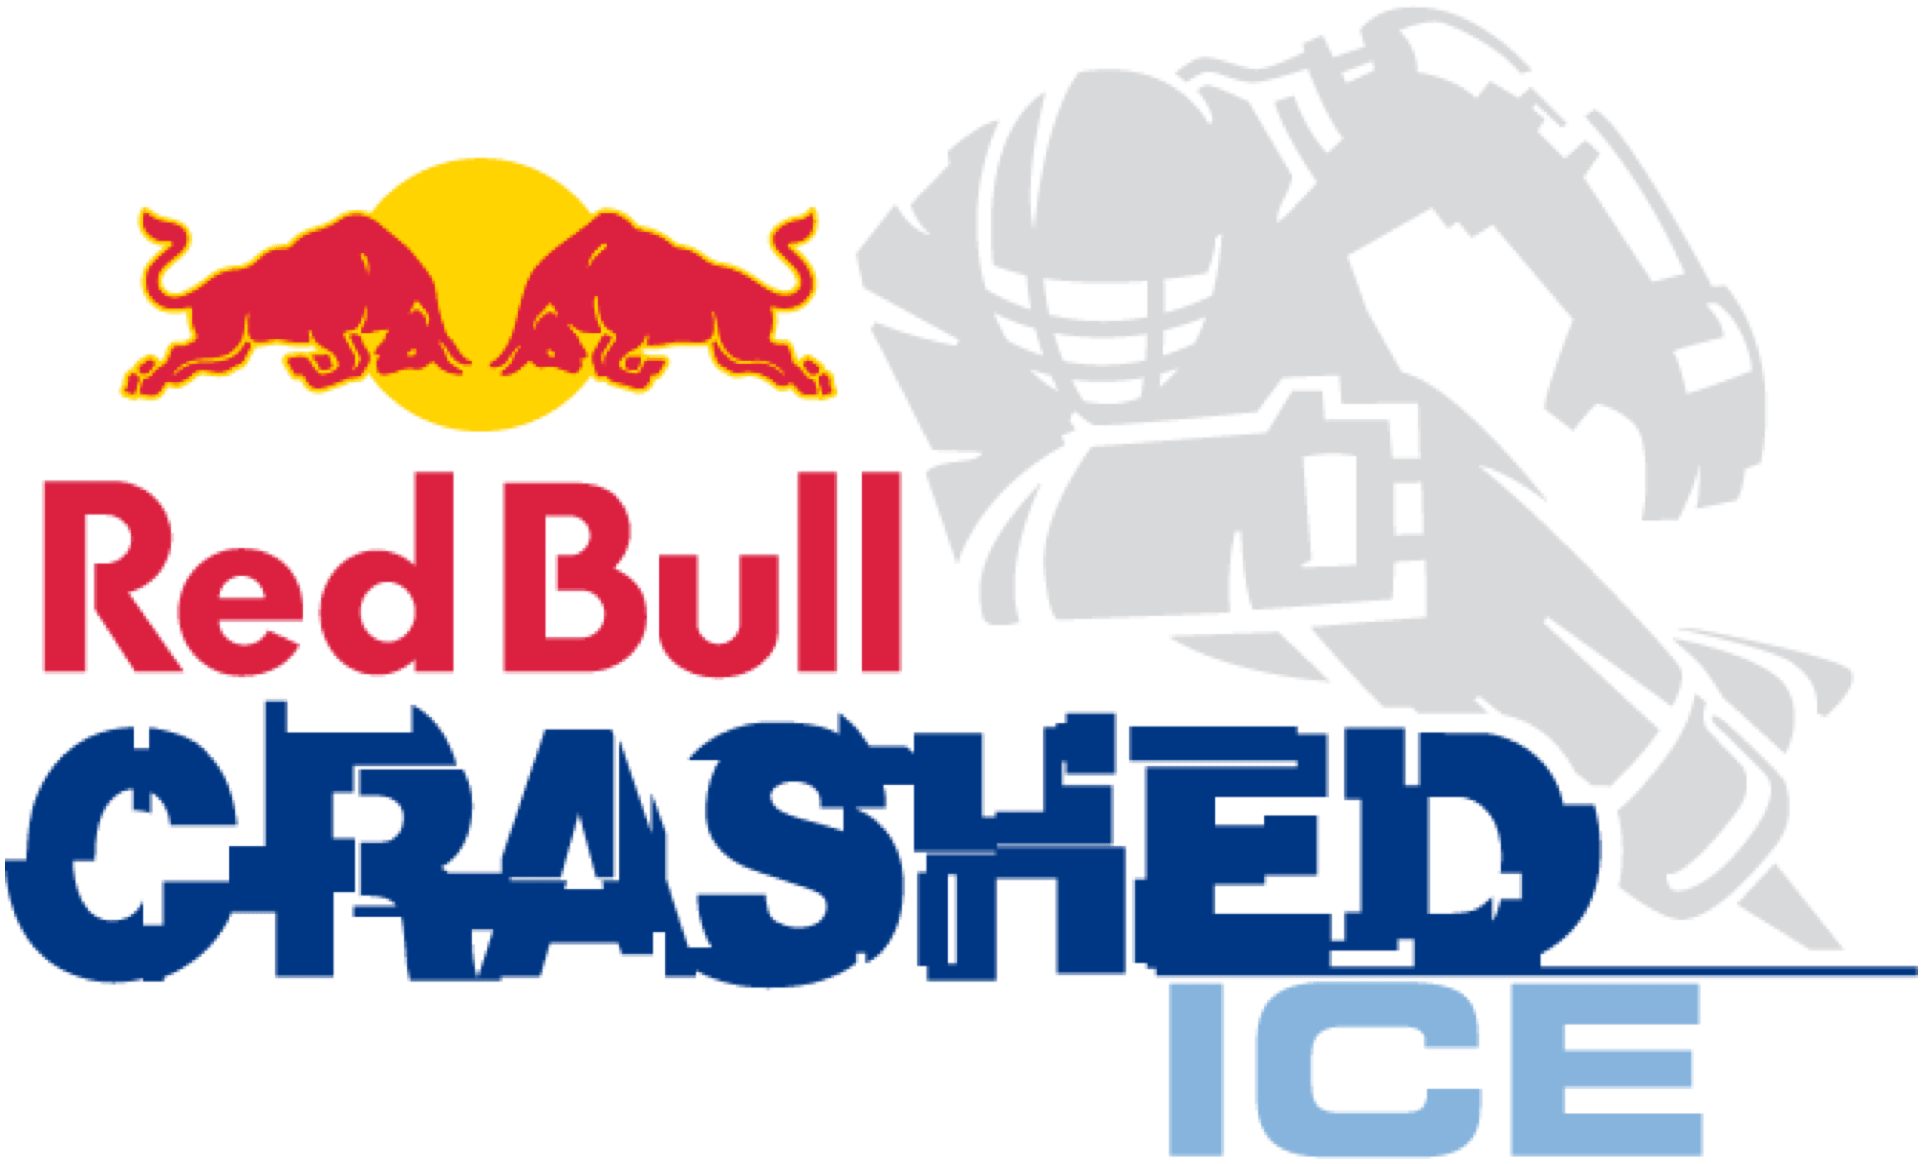 Red Bull Crashed Ice 2019 Jyvaskyla track build +video+